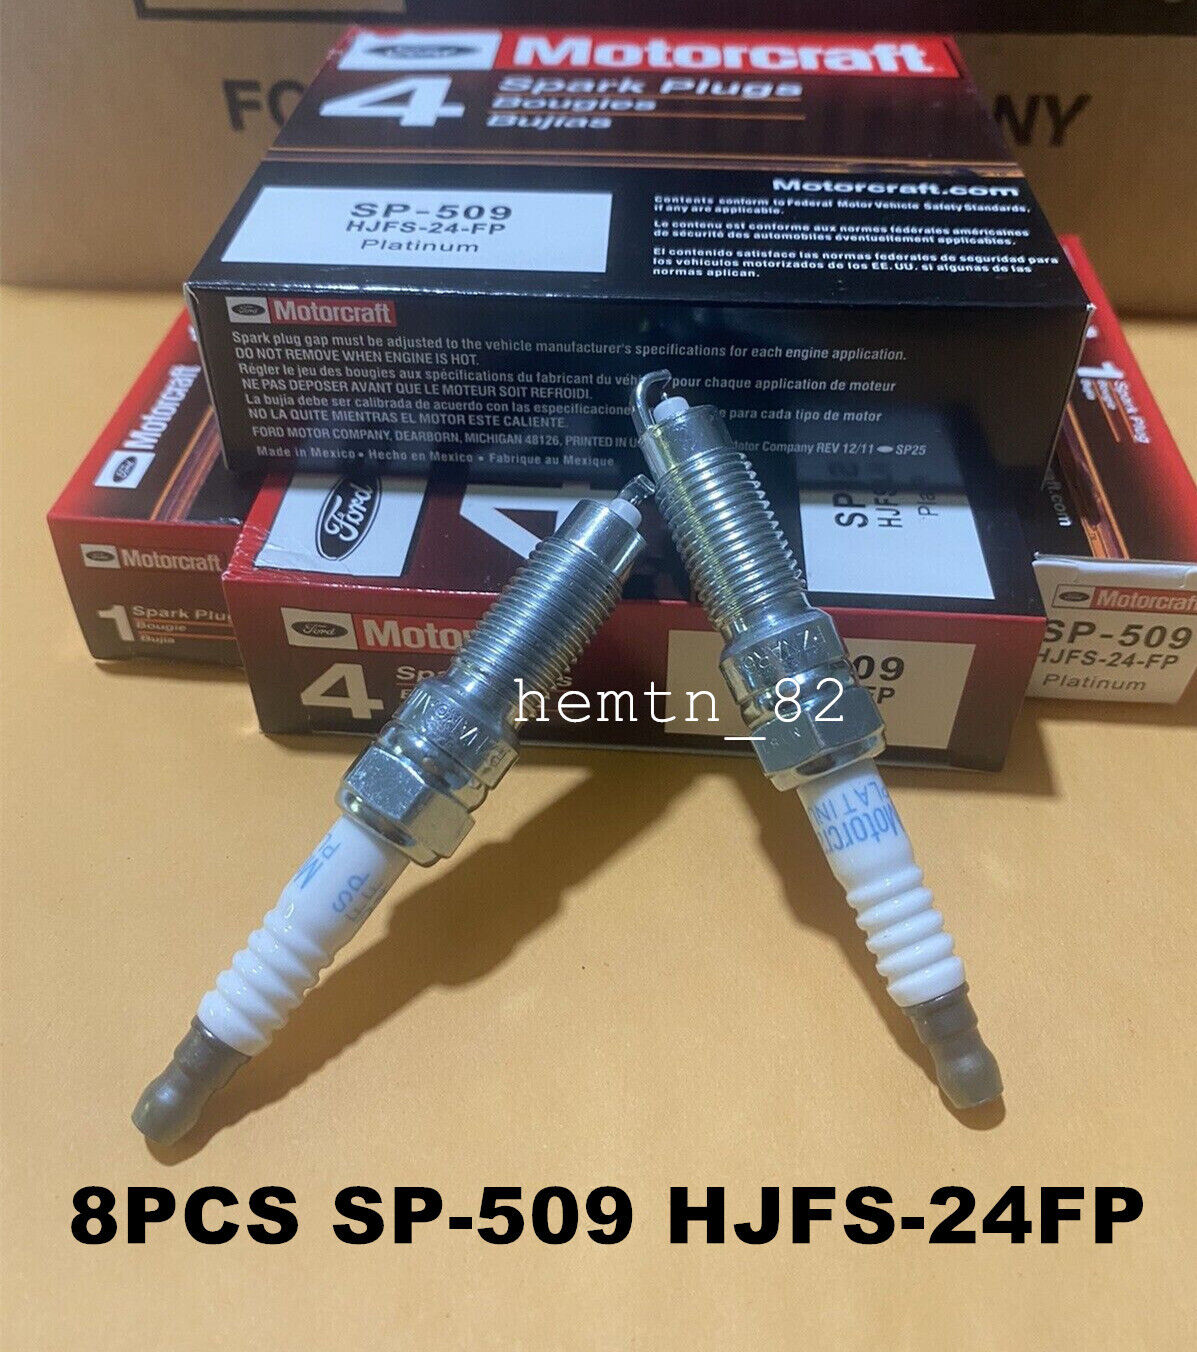 8PC Genuine SP-509 HJFS-24FP PLATINUM Spark Plugs For Ford MOTORCRAFT Super Duty